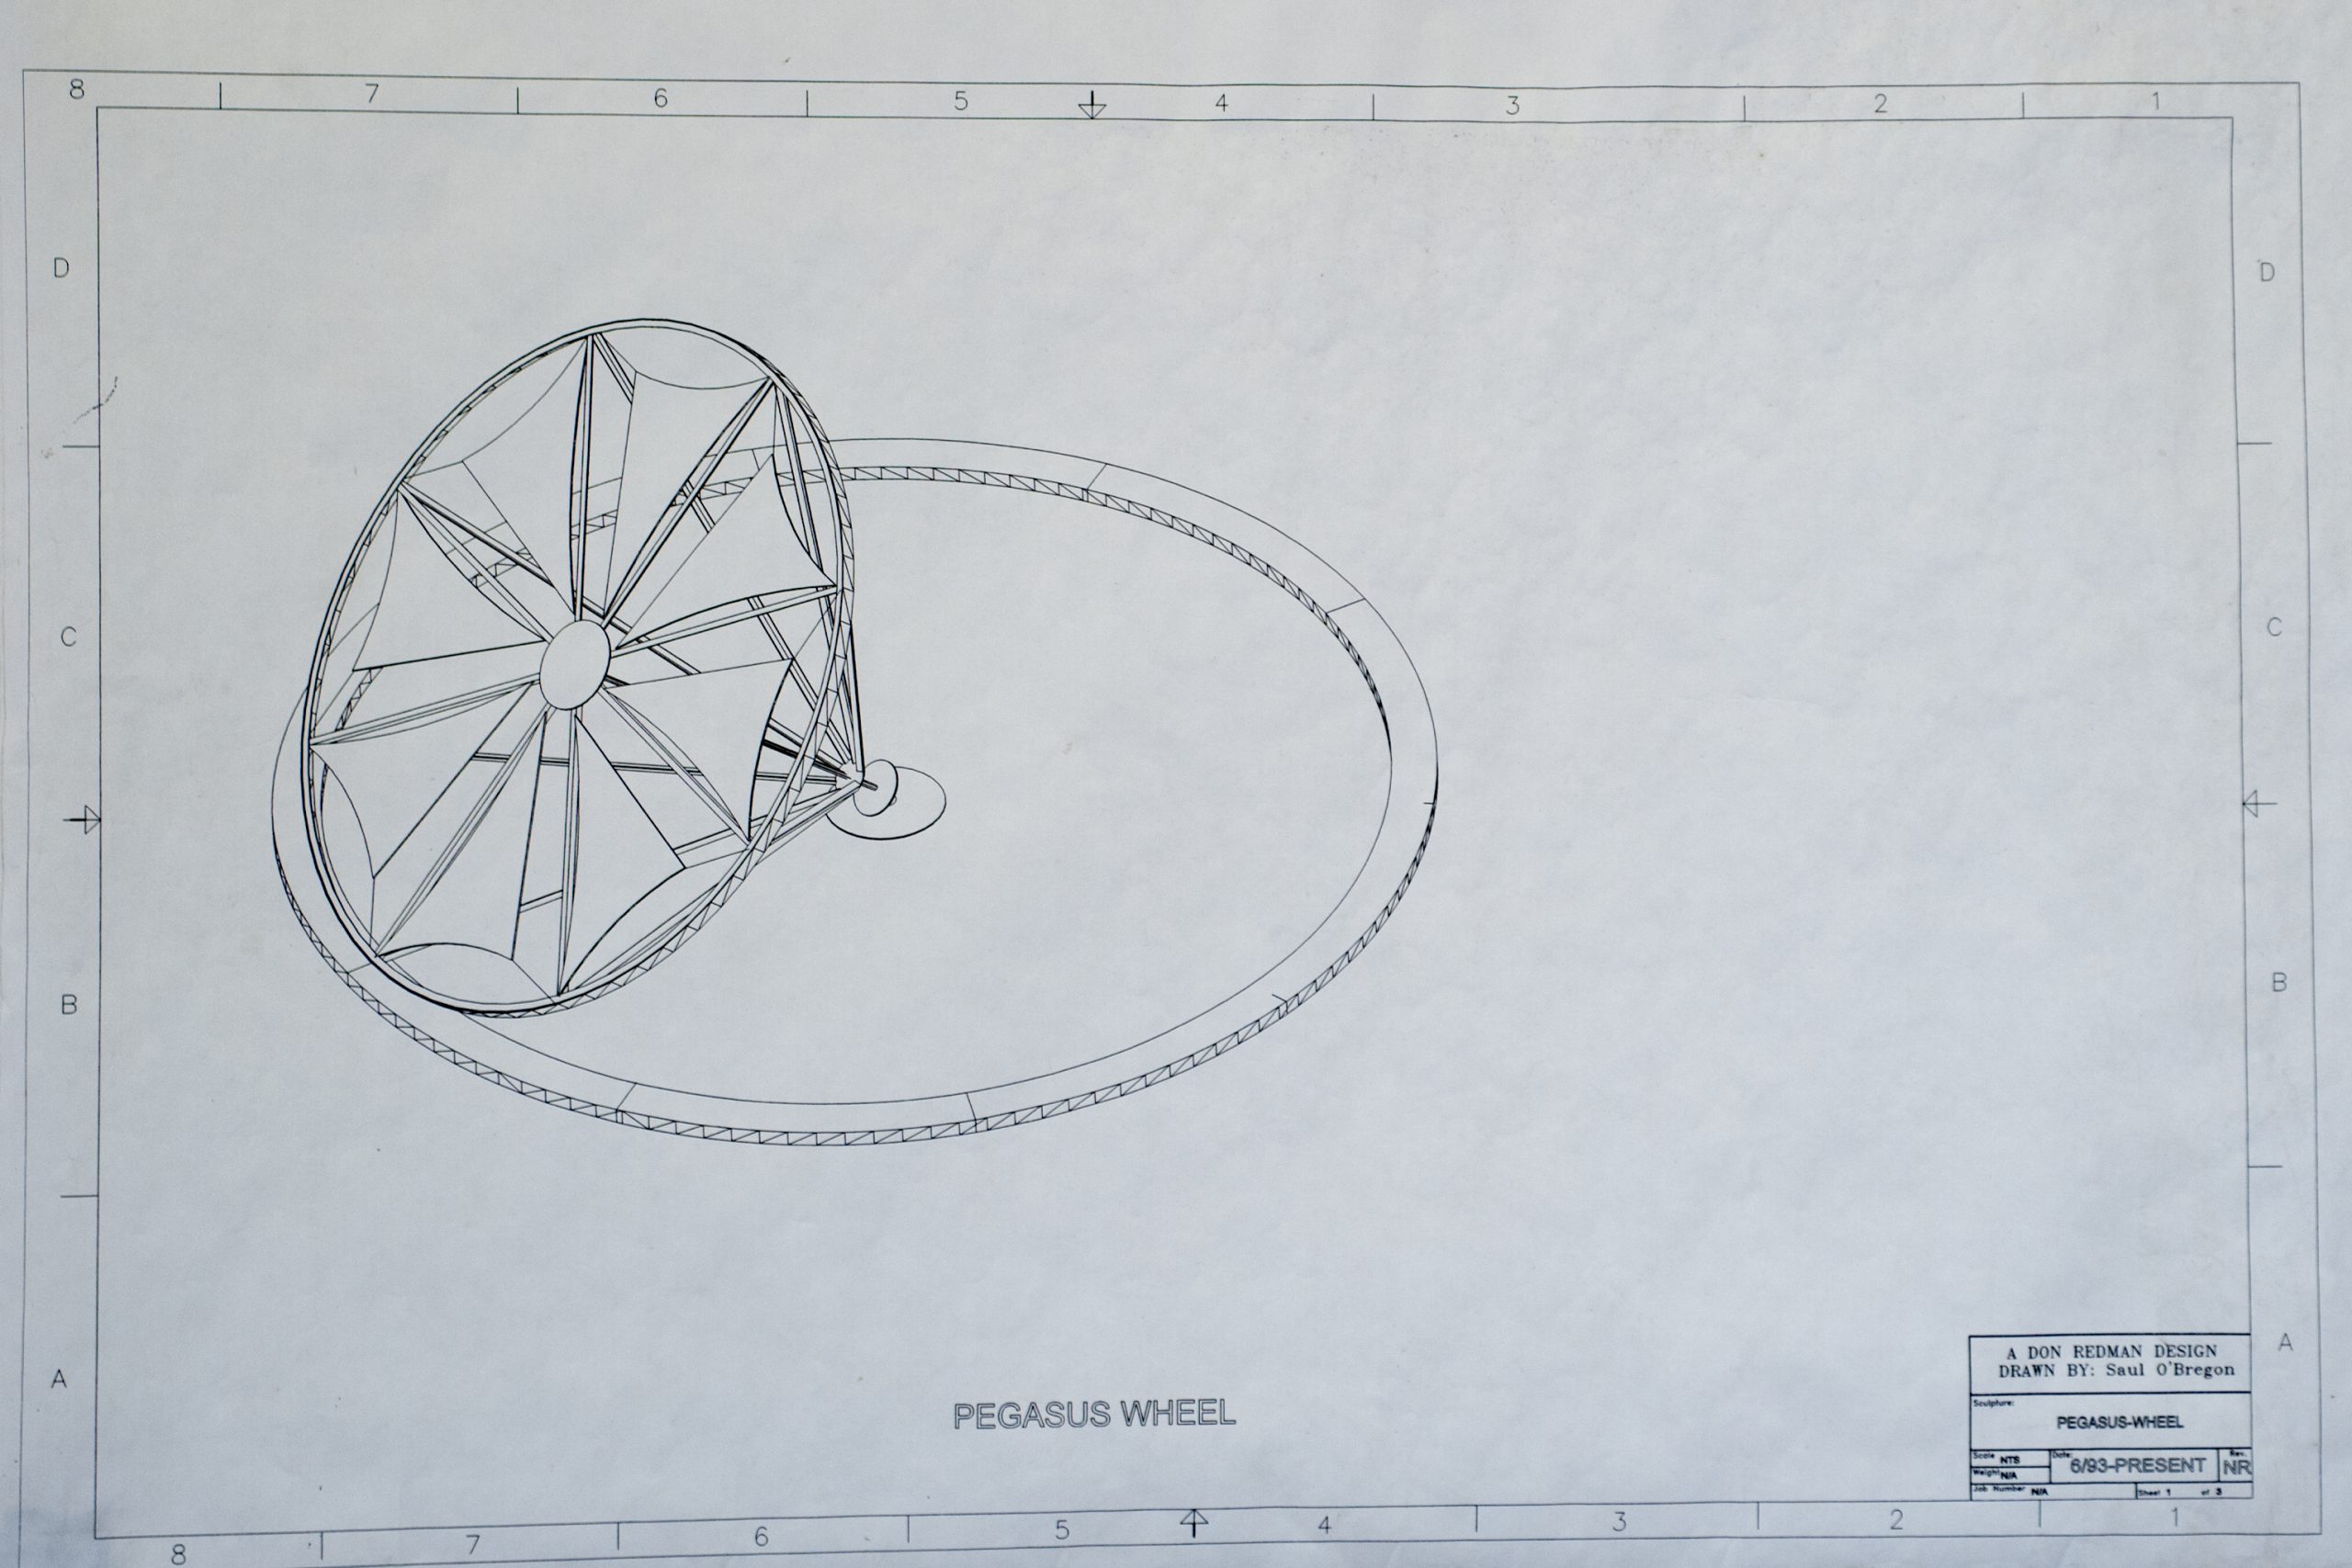 Pegasus Wheel